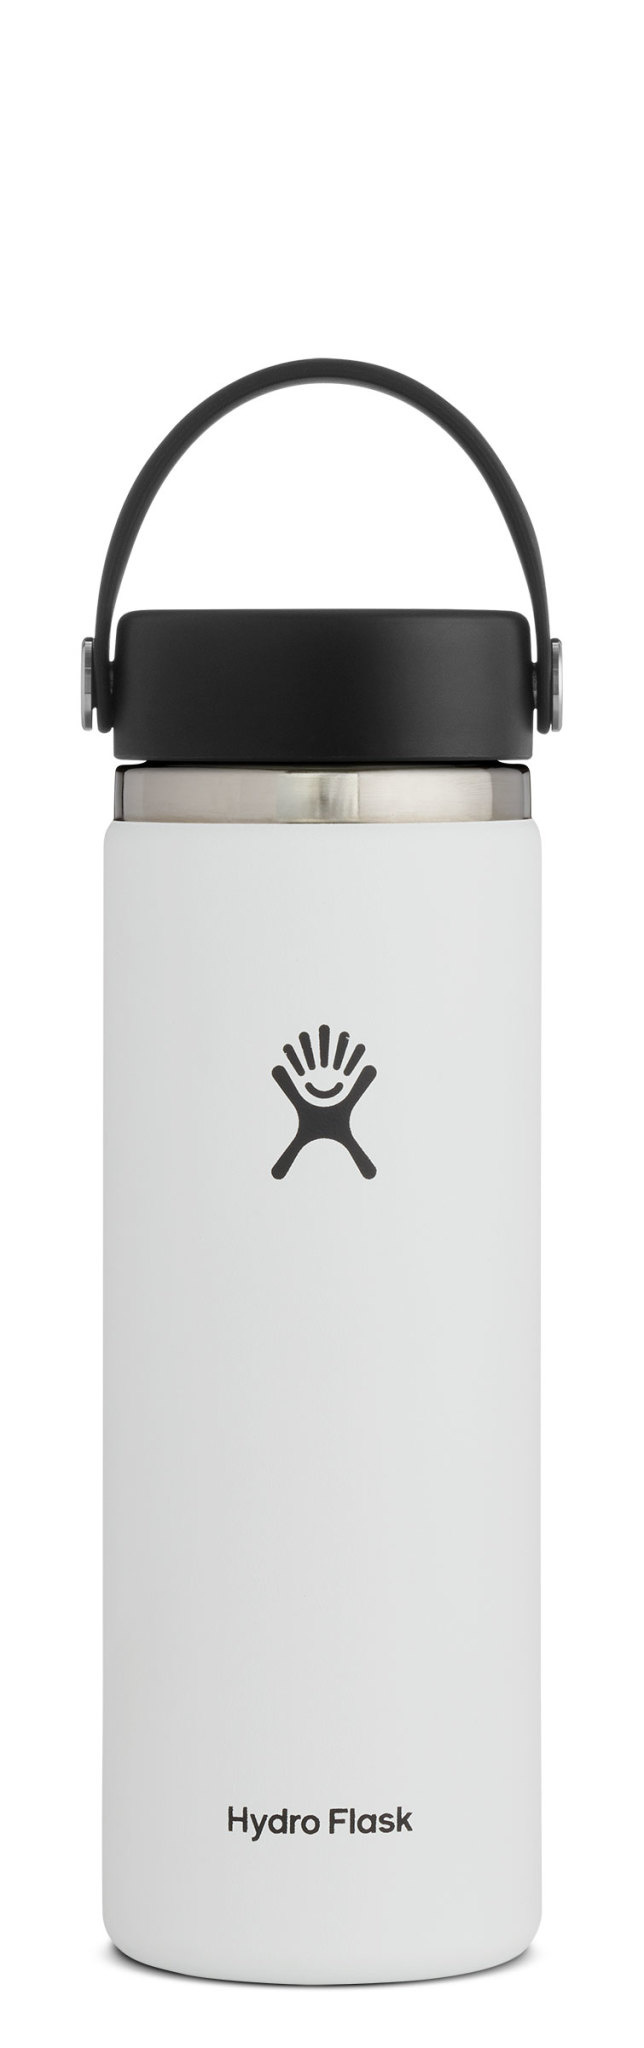 Hydro Flask Hydro Flask 20 oz. Insulated Coffee Flask - White